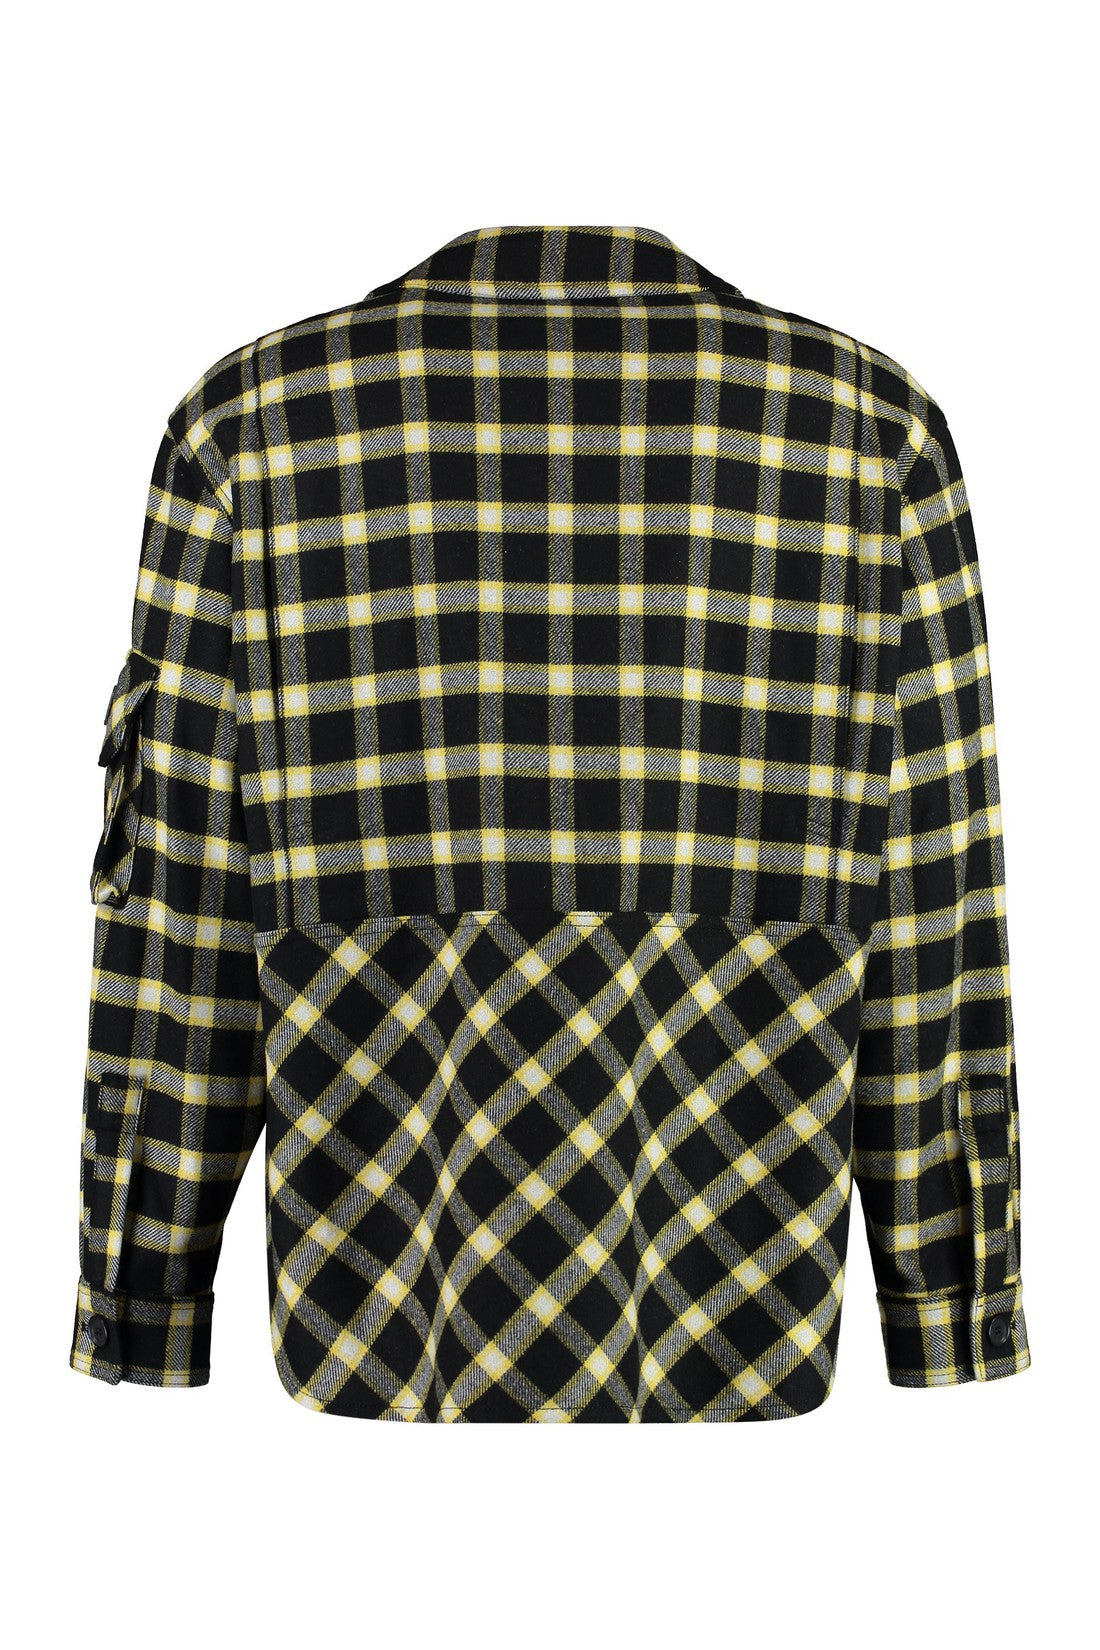 Versace-OUTLET-SALE-Wool blend overshirt-ARCHIVIST